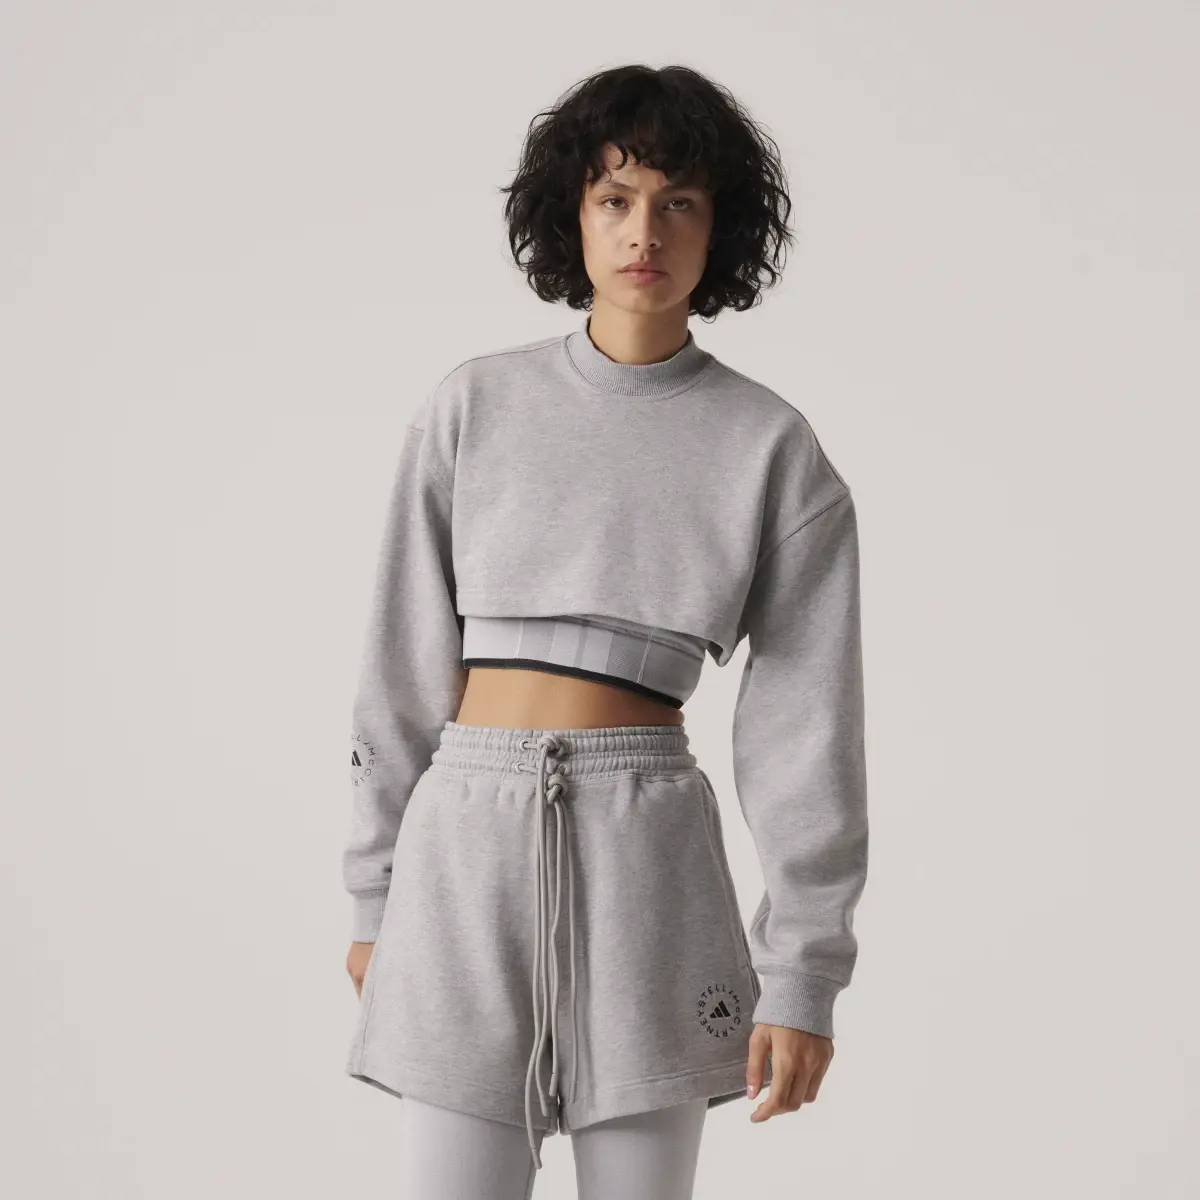 Adidas by Stella McCartney TrueCasuals Cropped Sweatshirt. 1